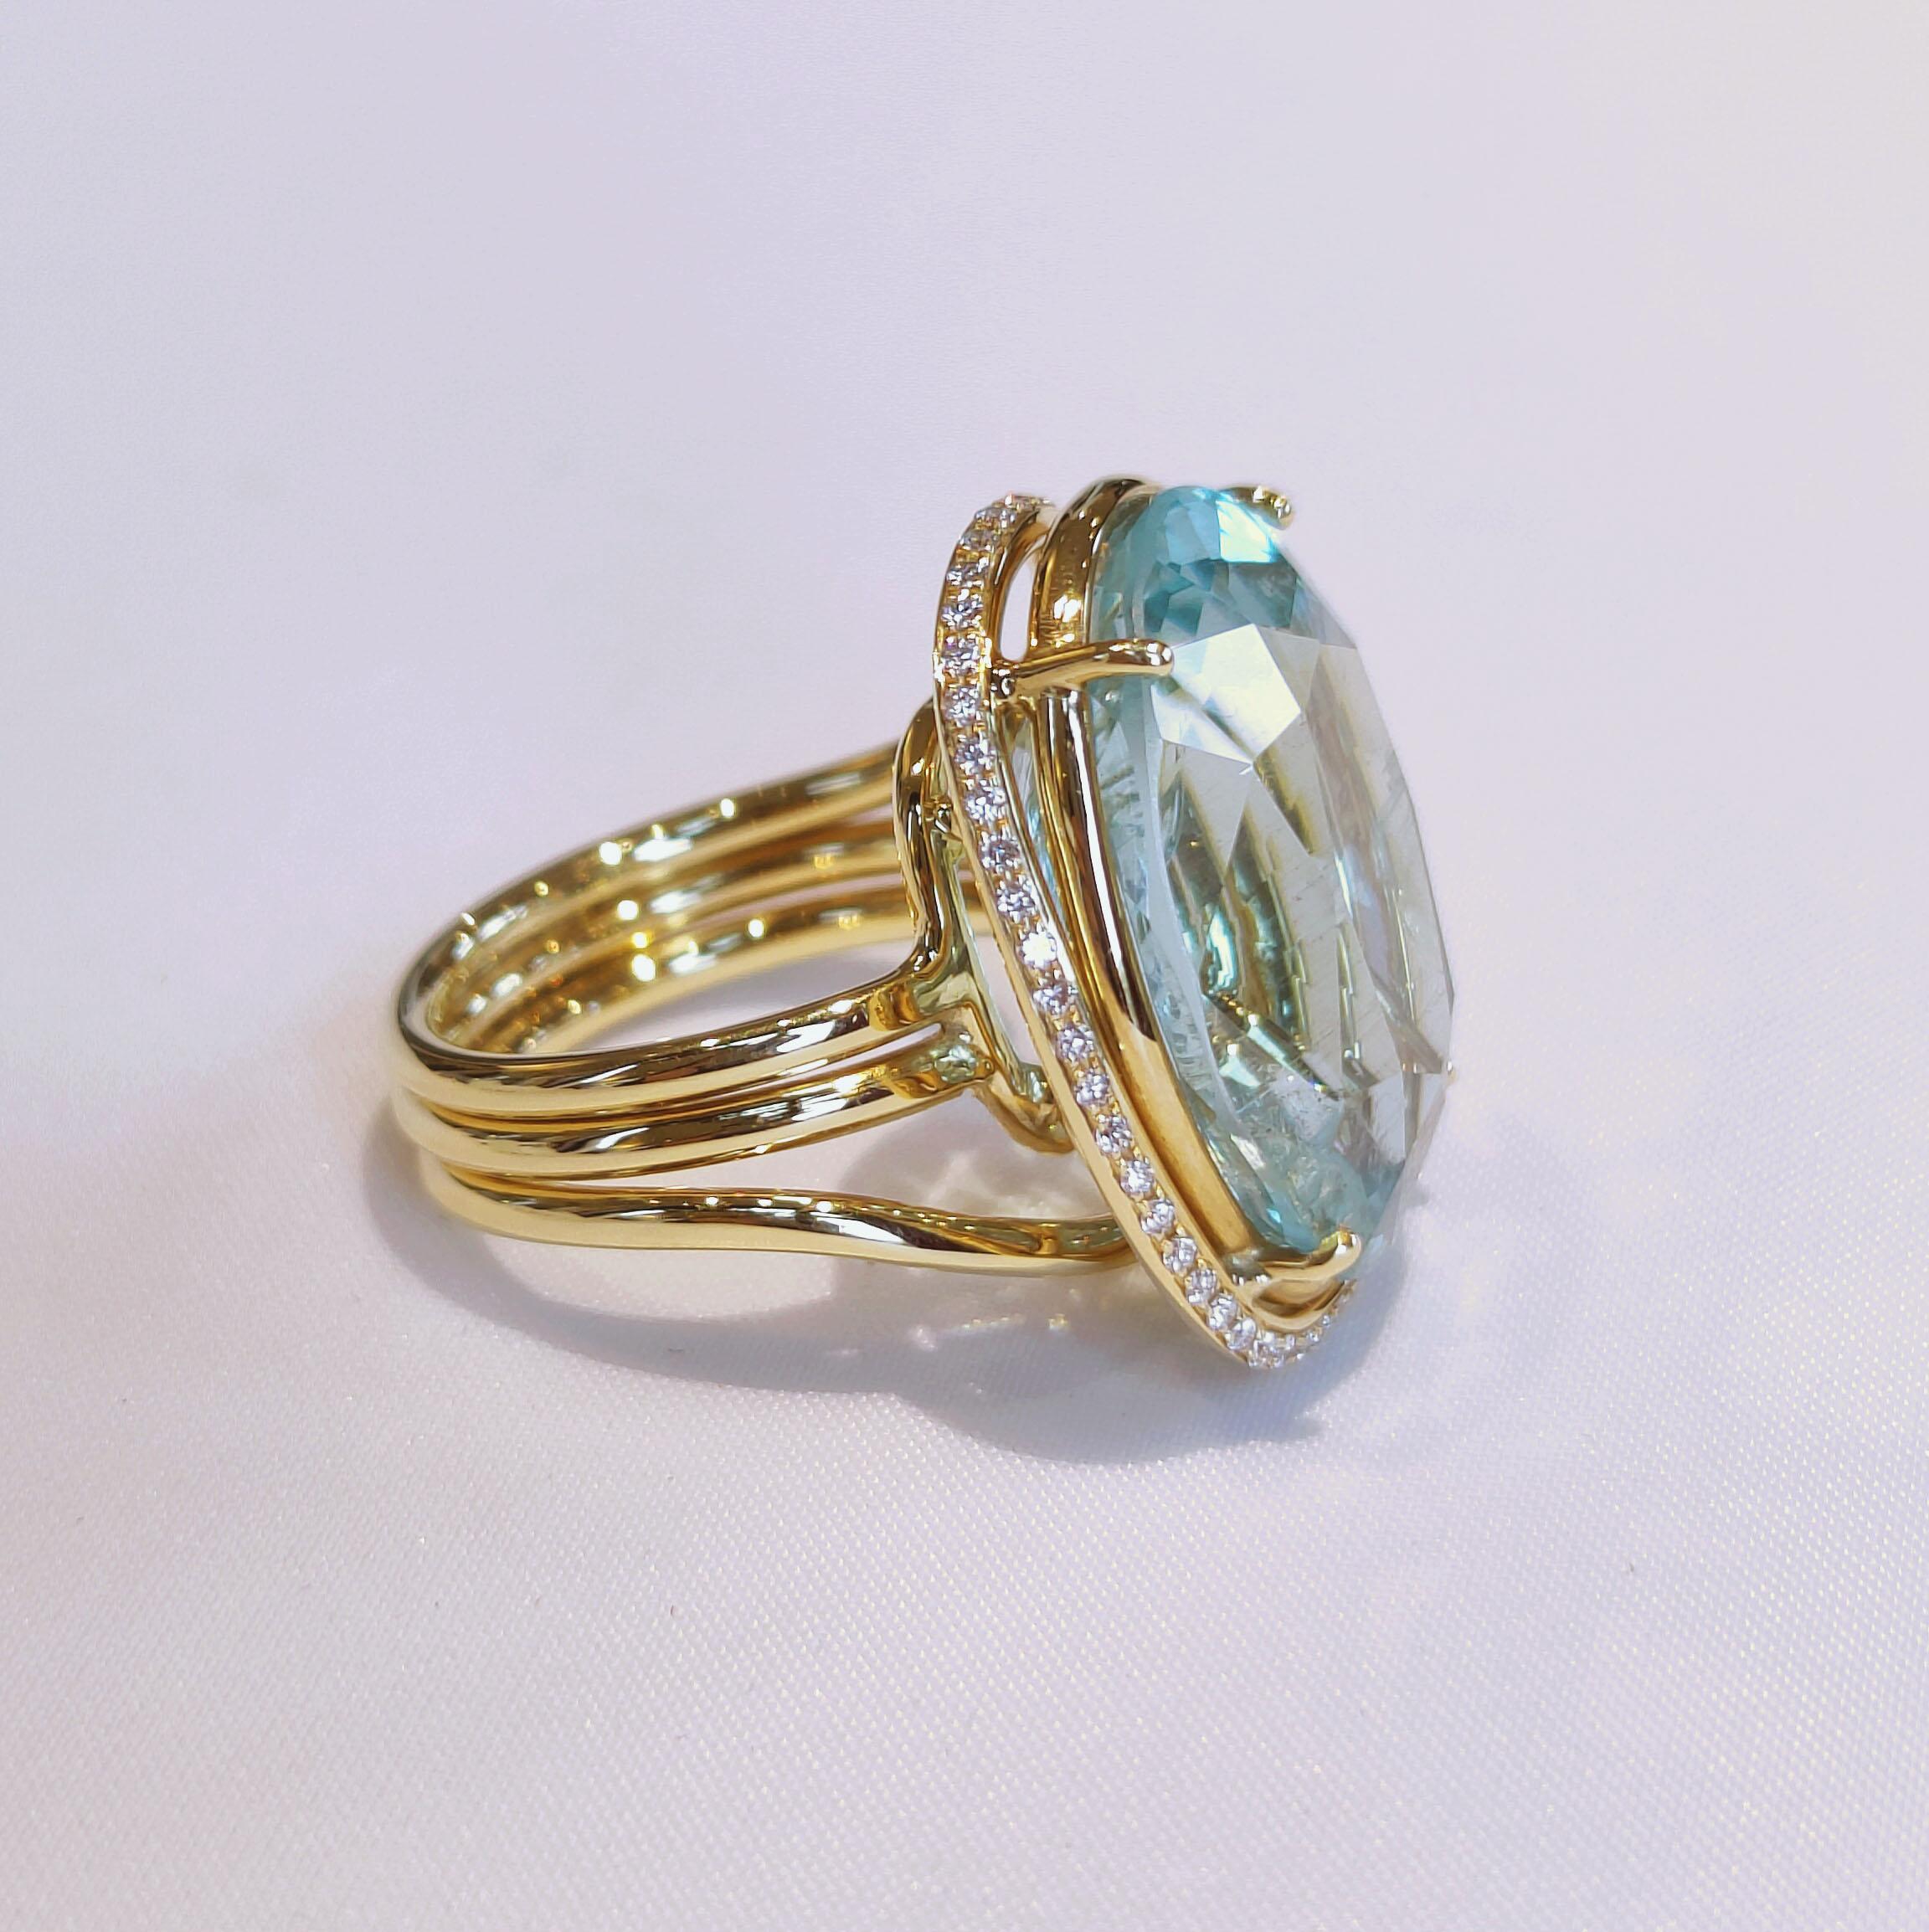 Contemporary Big Oval Cut Aquamarine Ring in 18 Karat Yellow Gold and Diamonds